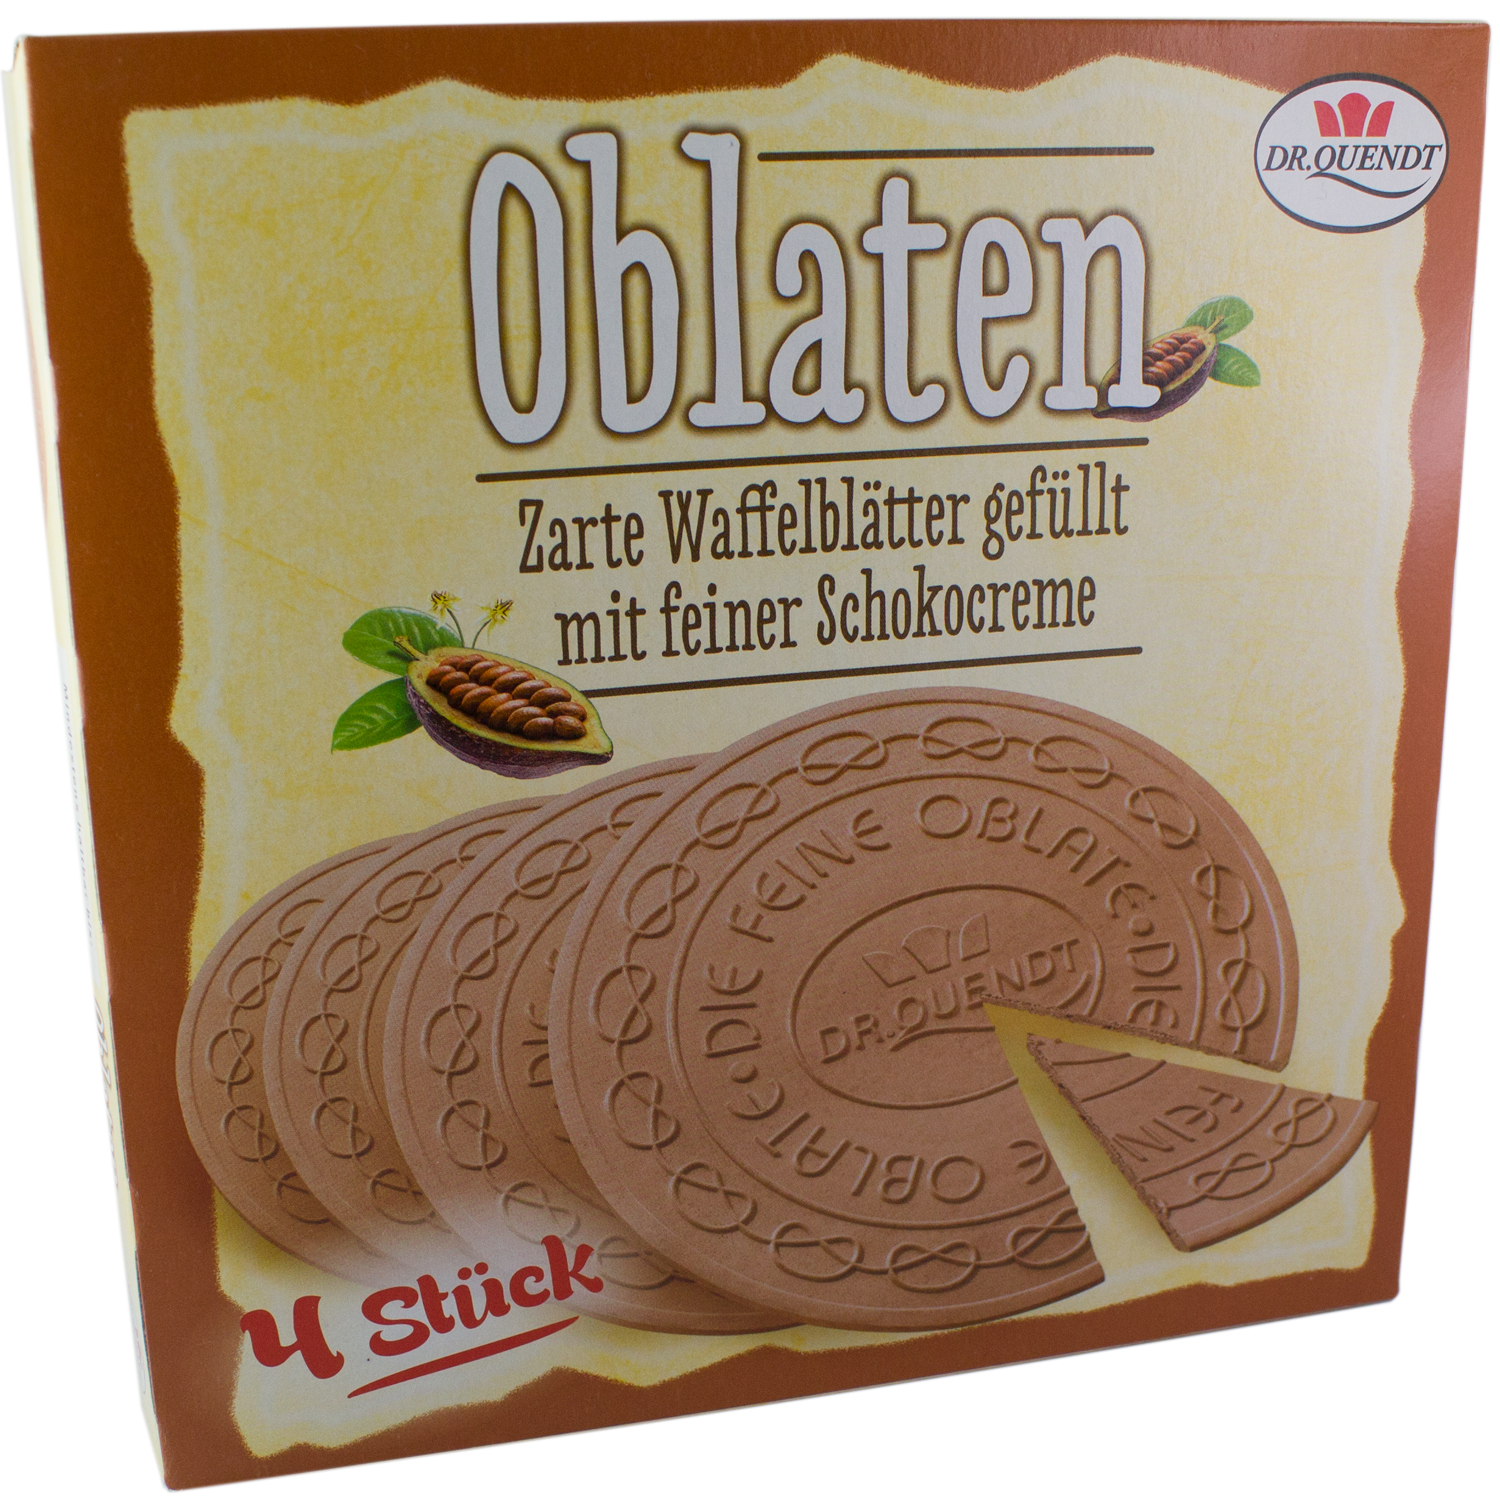 Ossikiste.de | Dr. Quendt Oblaten Schokocreme 150 g | online kaufen